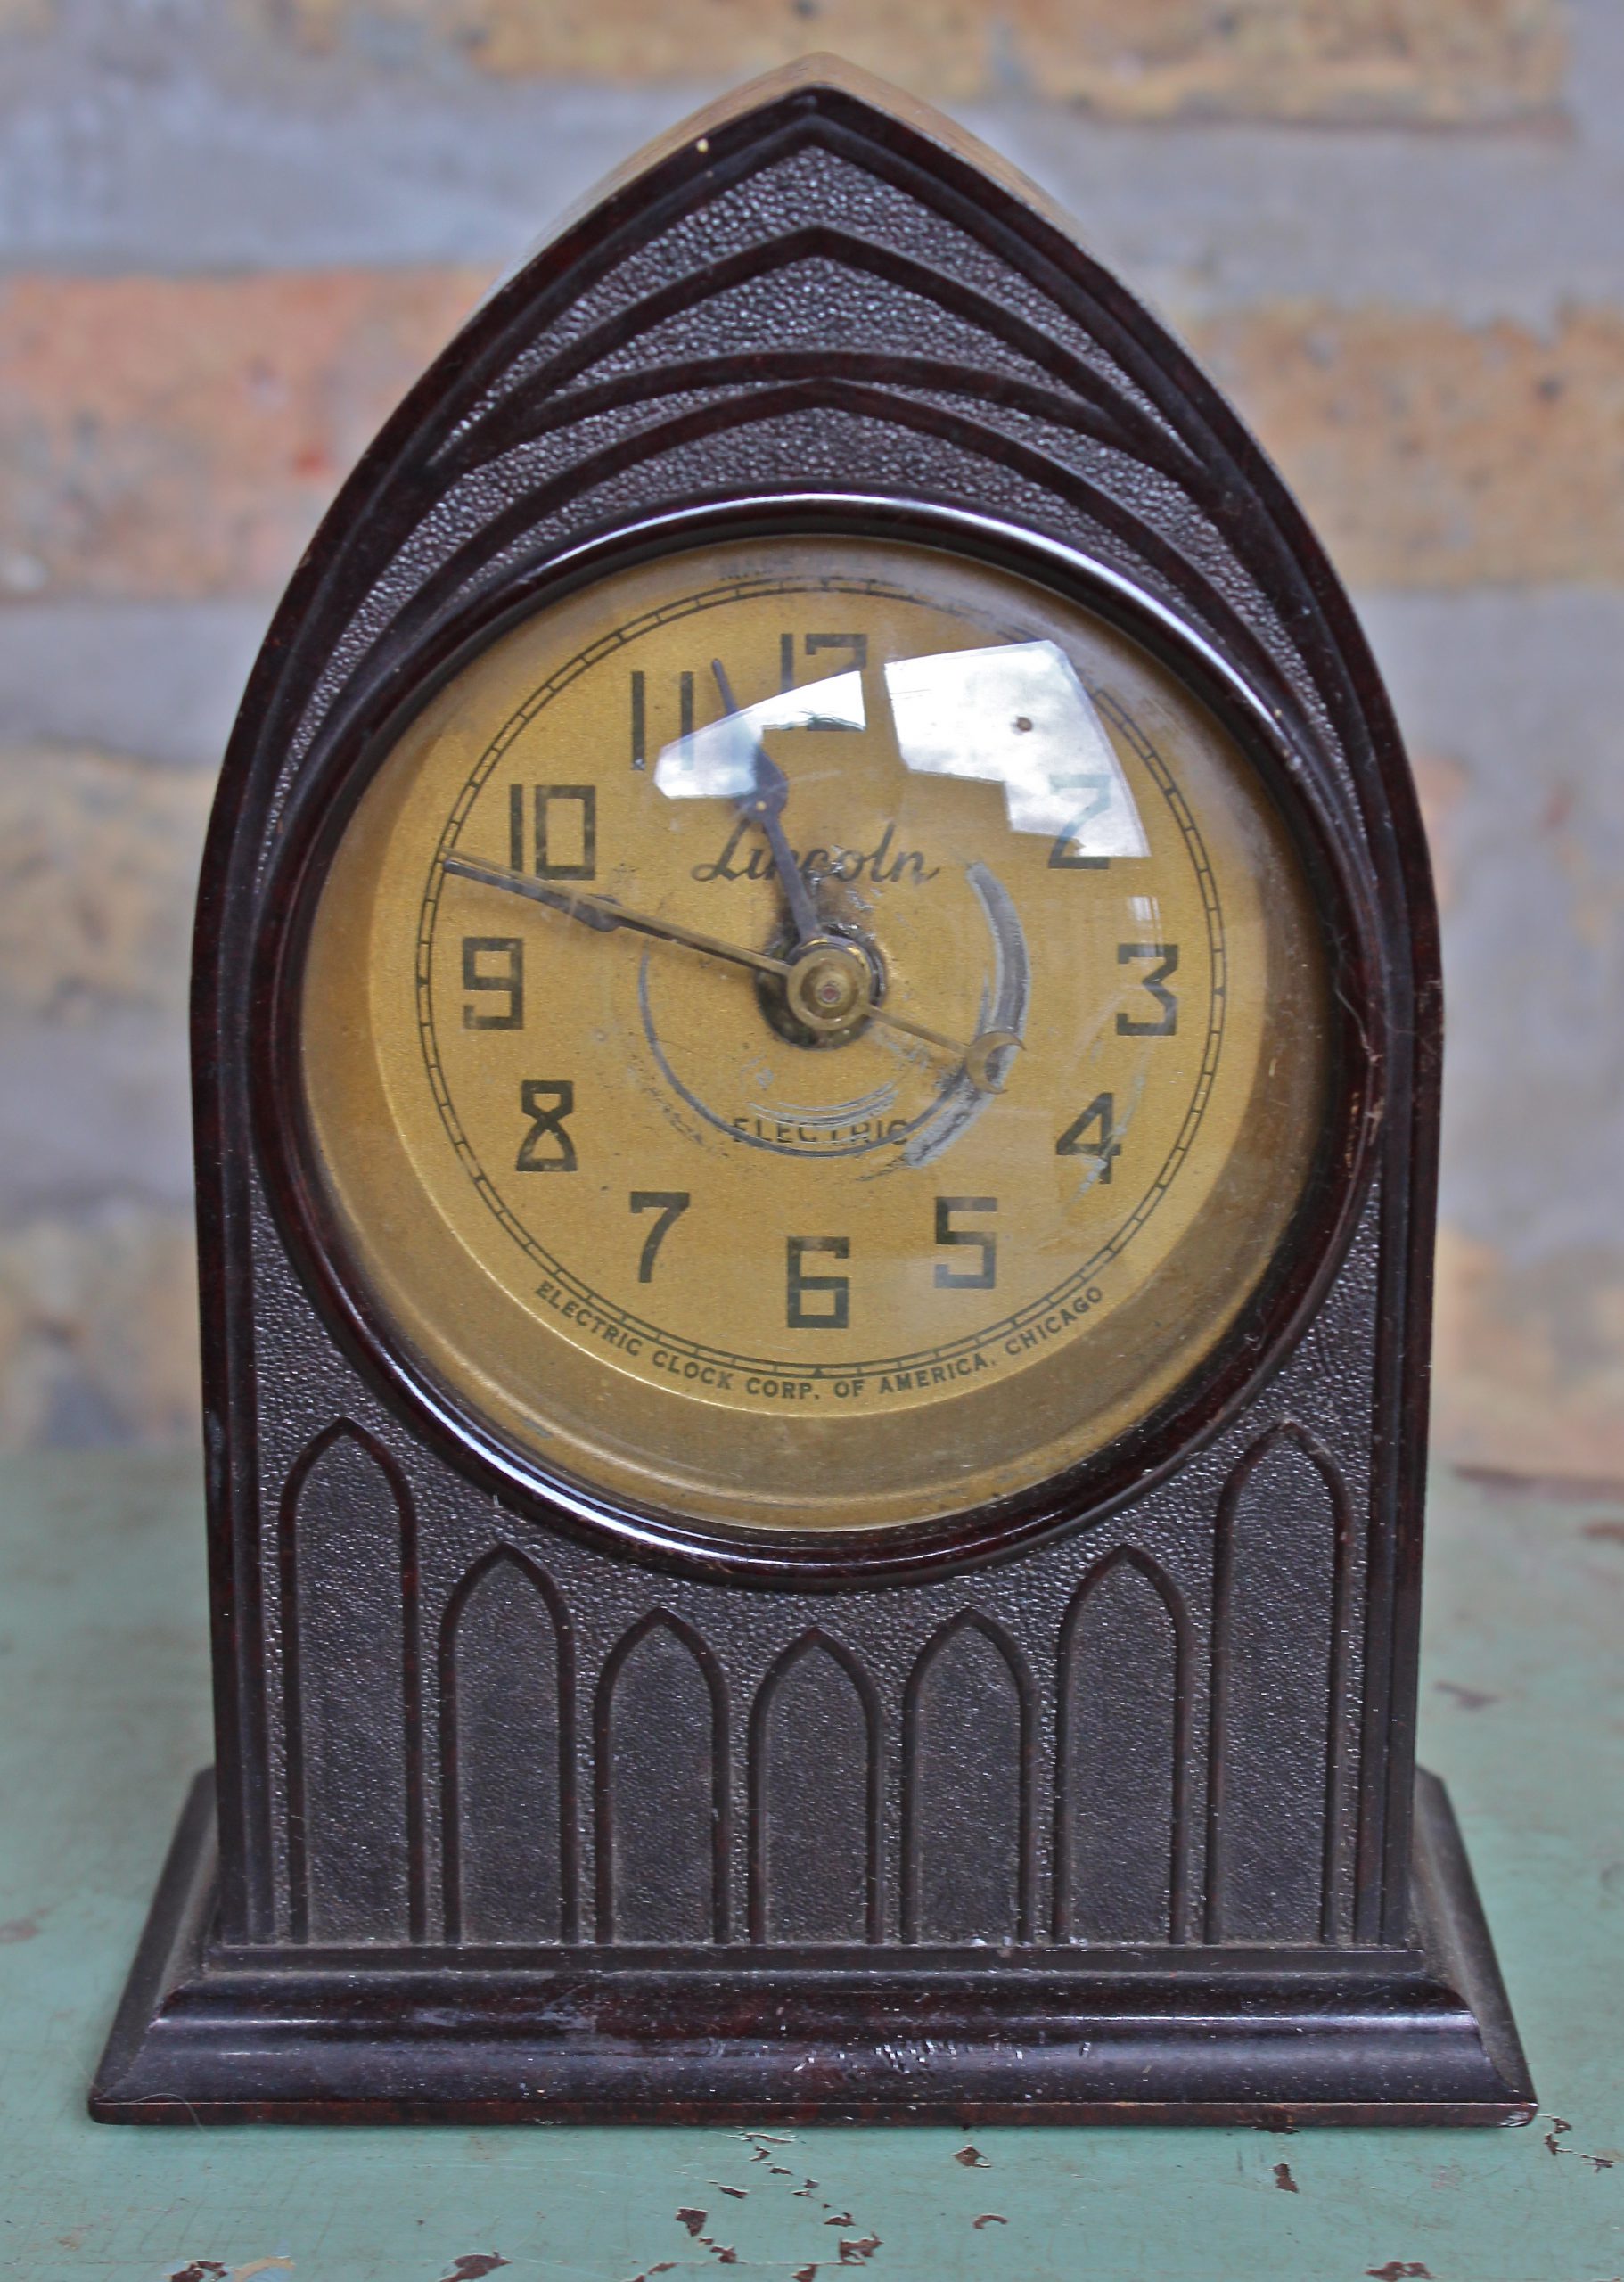 Electric Clock Corp. of America, est. 1930